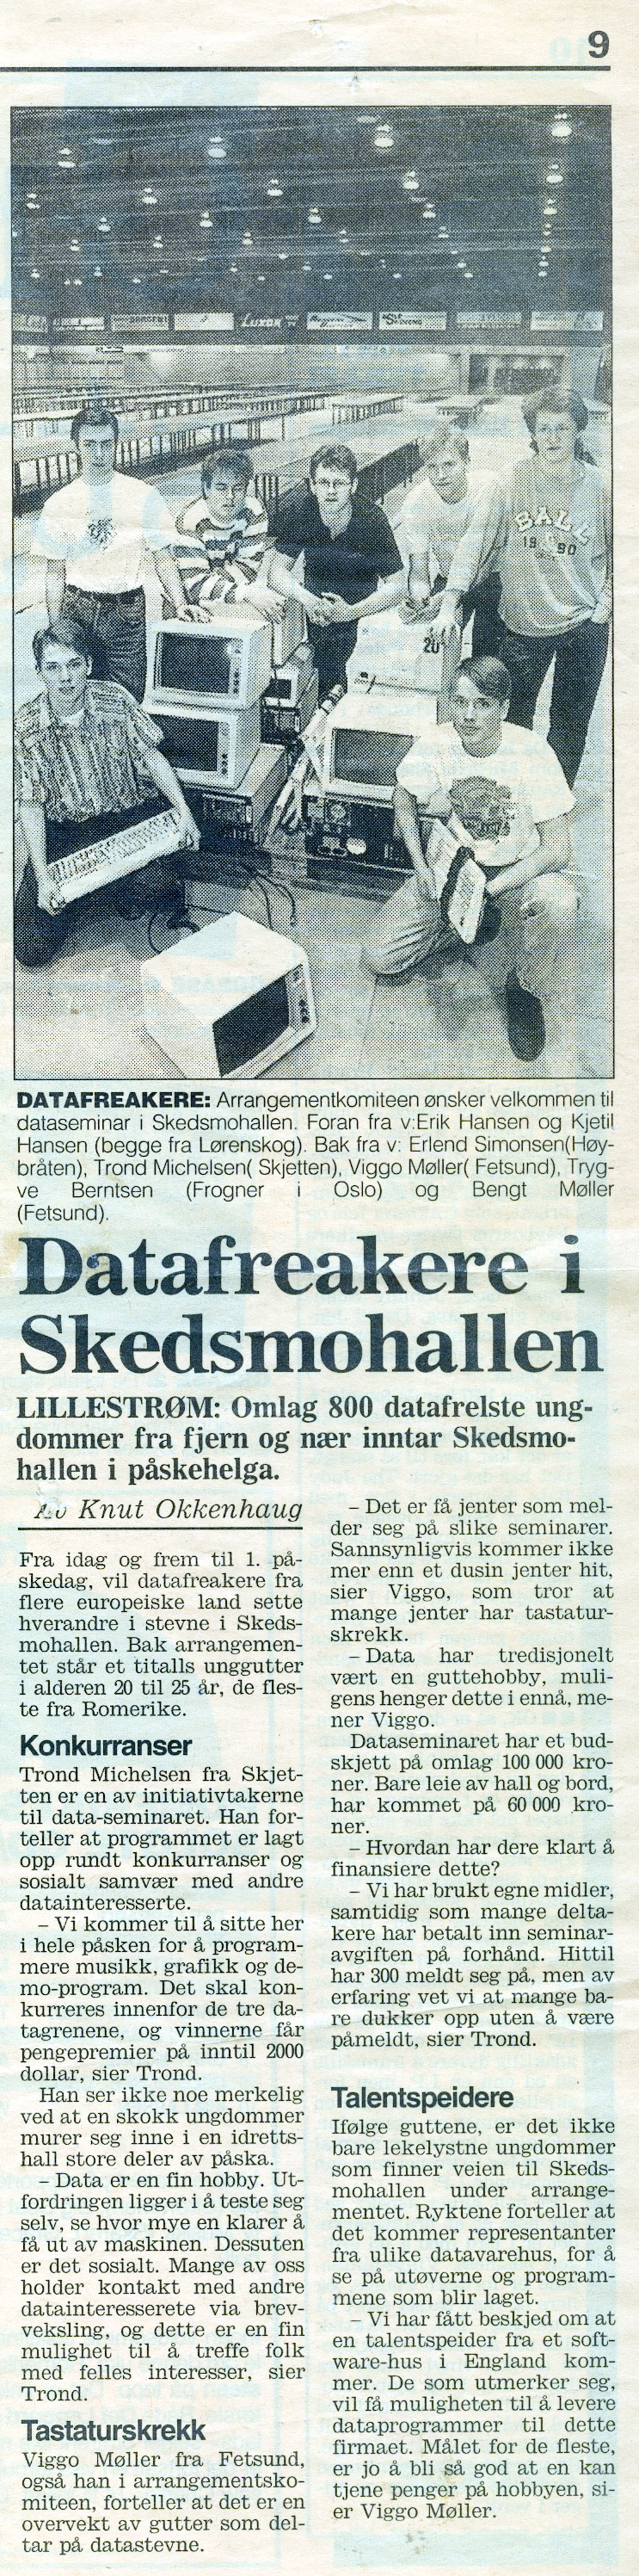 _Datafreakere_ i Skedsmohallen